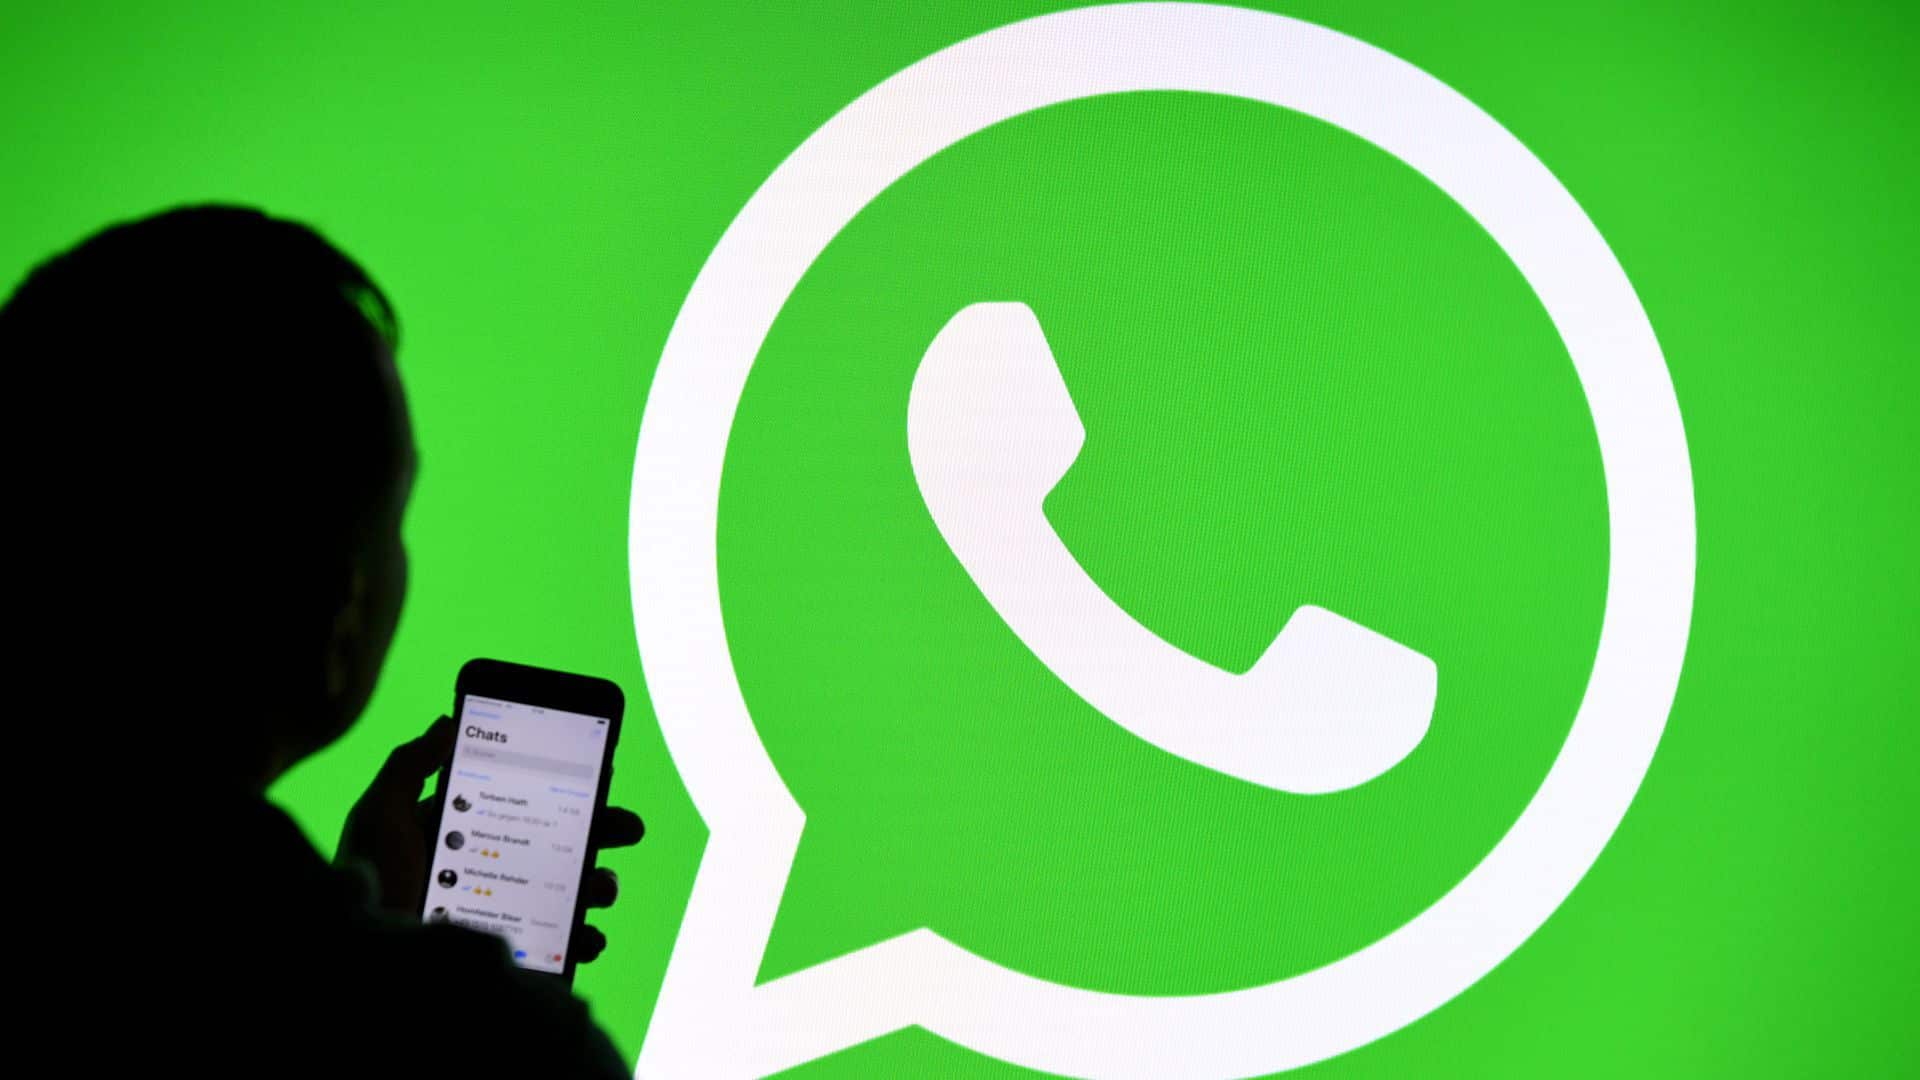 Apple App Store privacy labels unfair, says WhatsApp